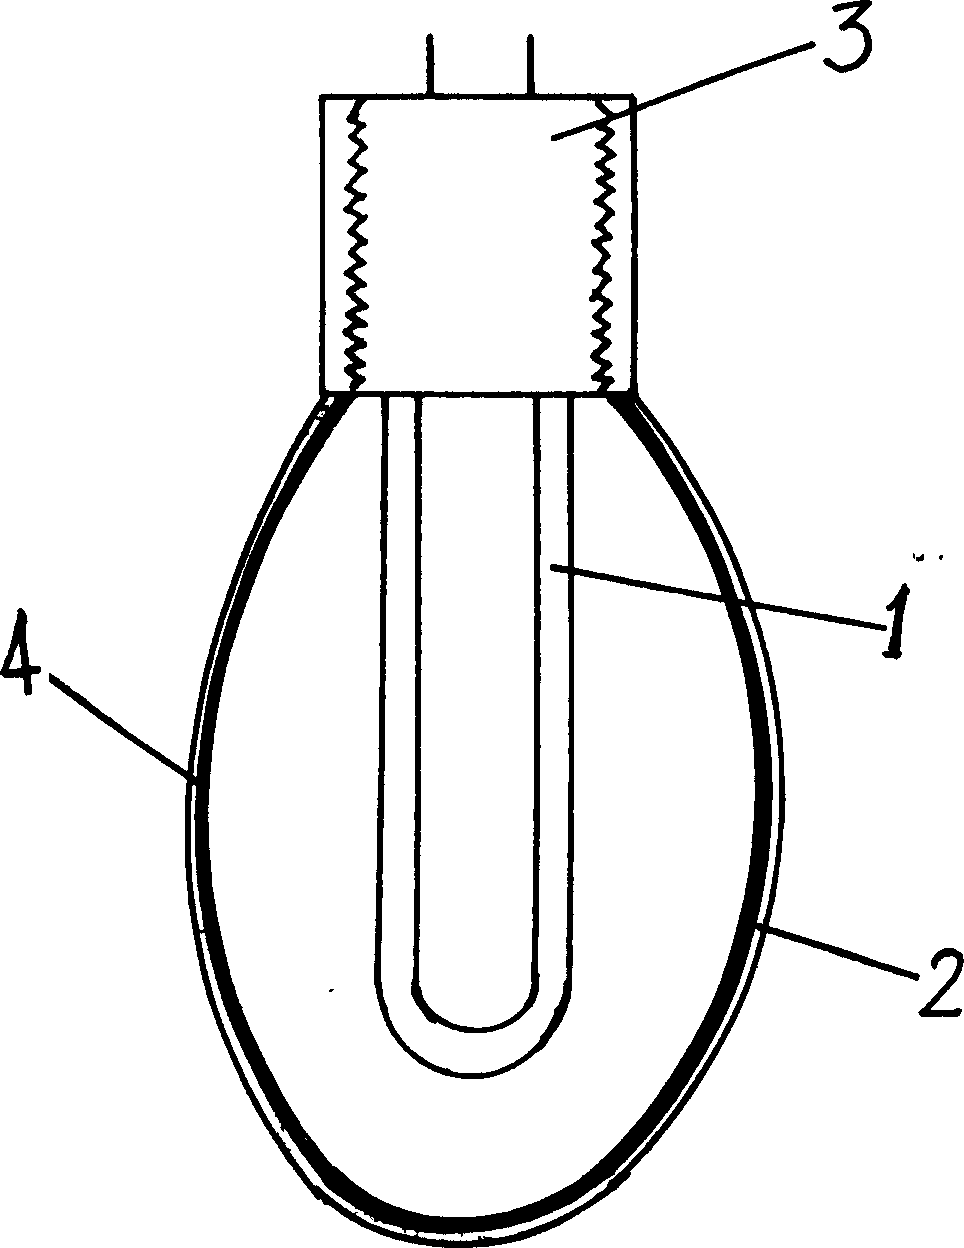 Separated fluorescent light